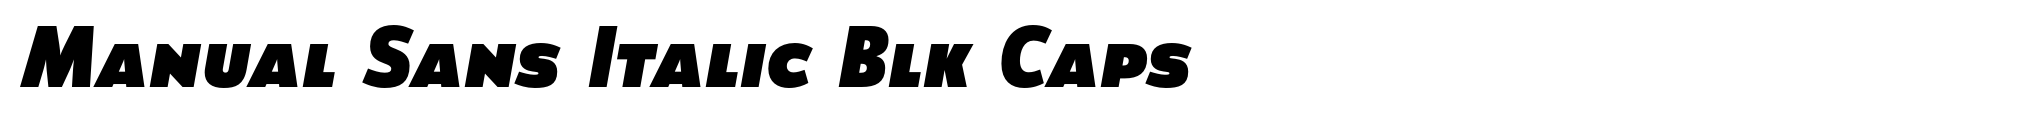 Manual Sans Italic Blk Caps image